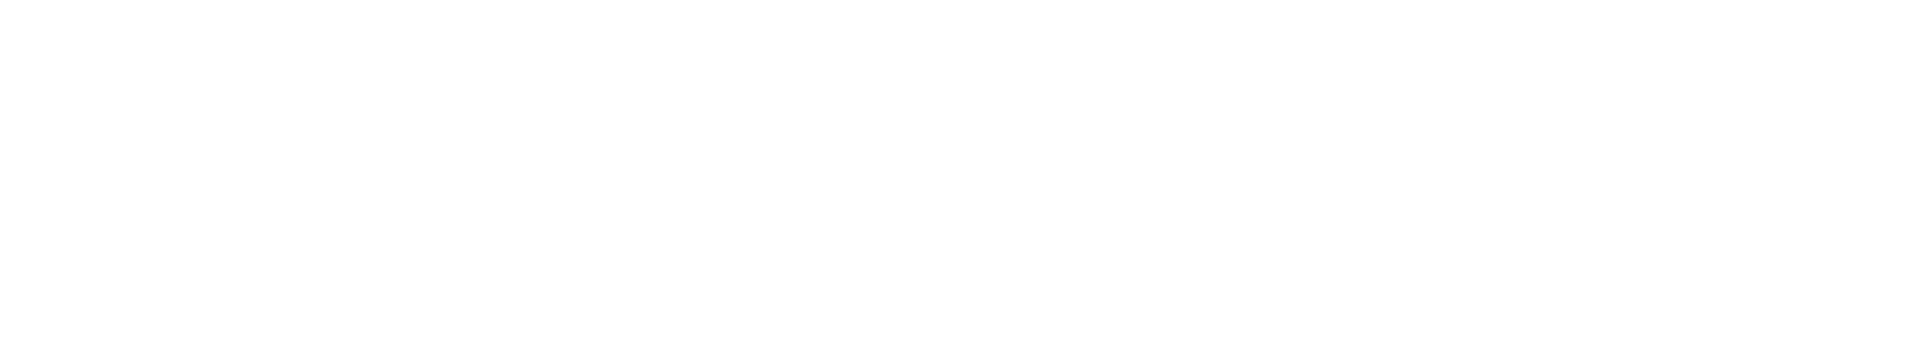 Hillpointe logo